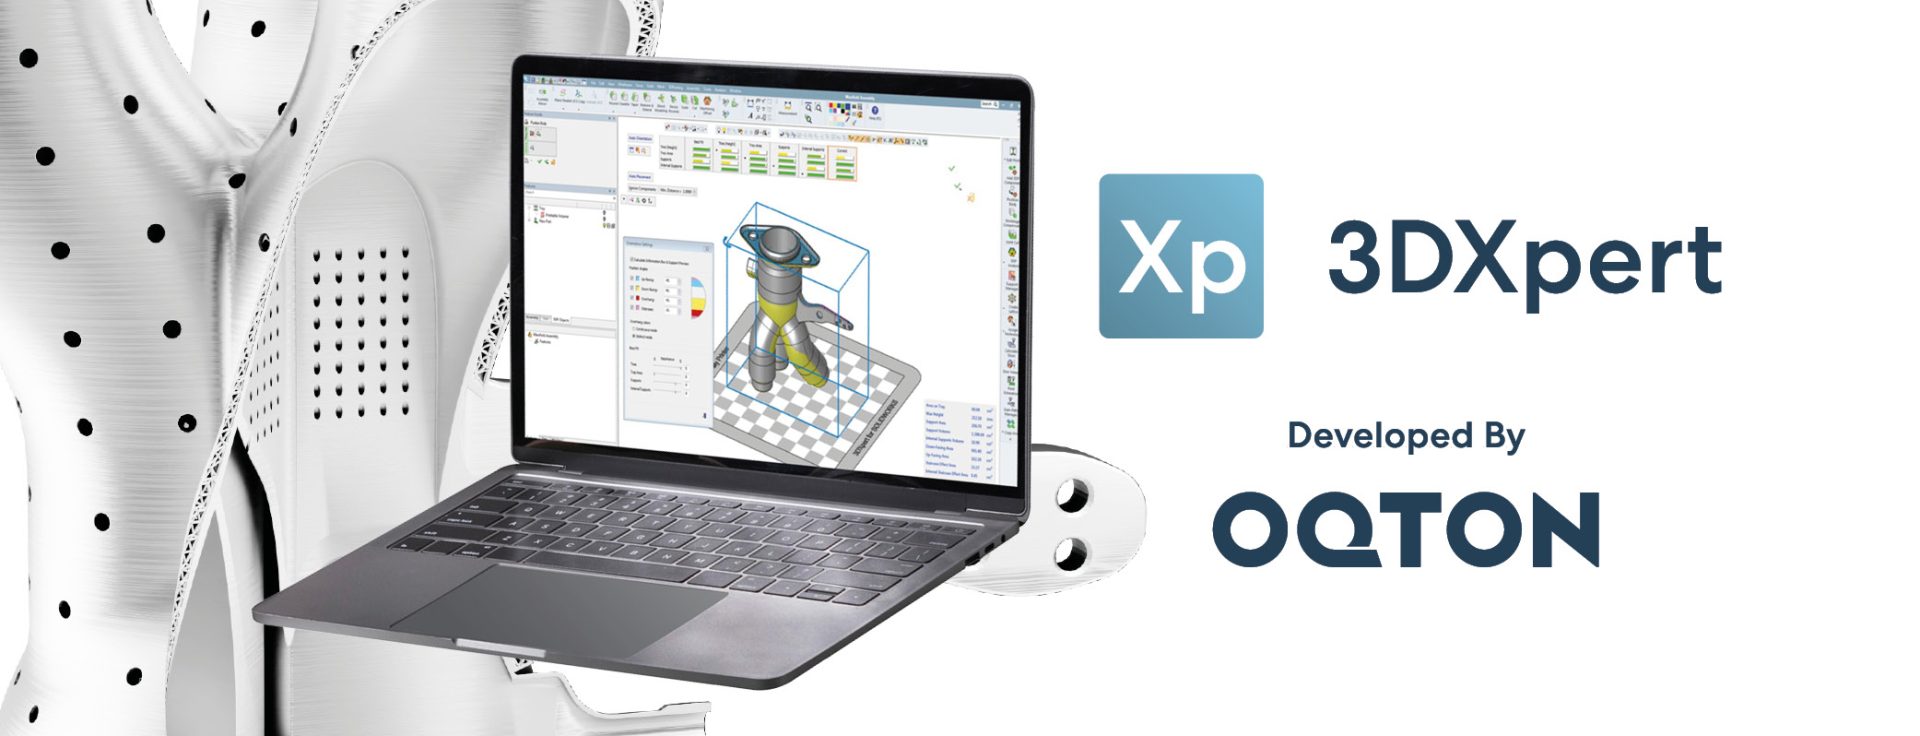 Webinar / 3D XPERT OQTON